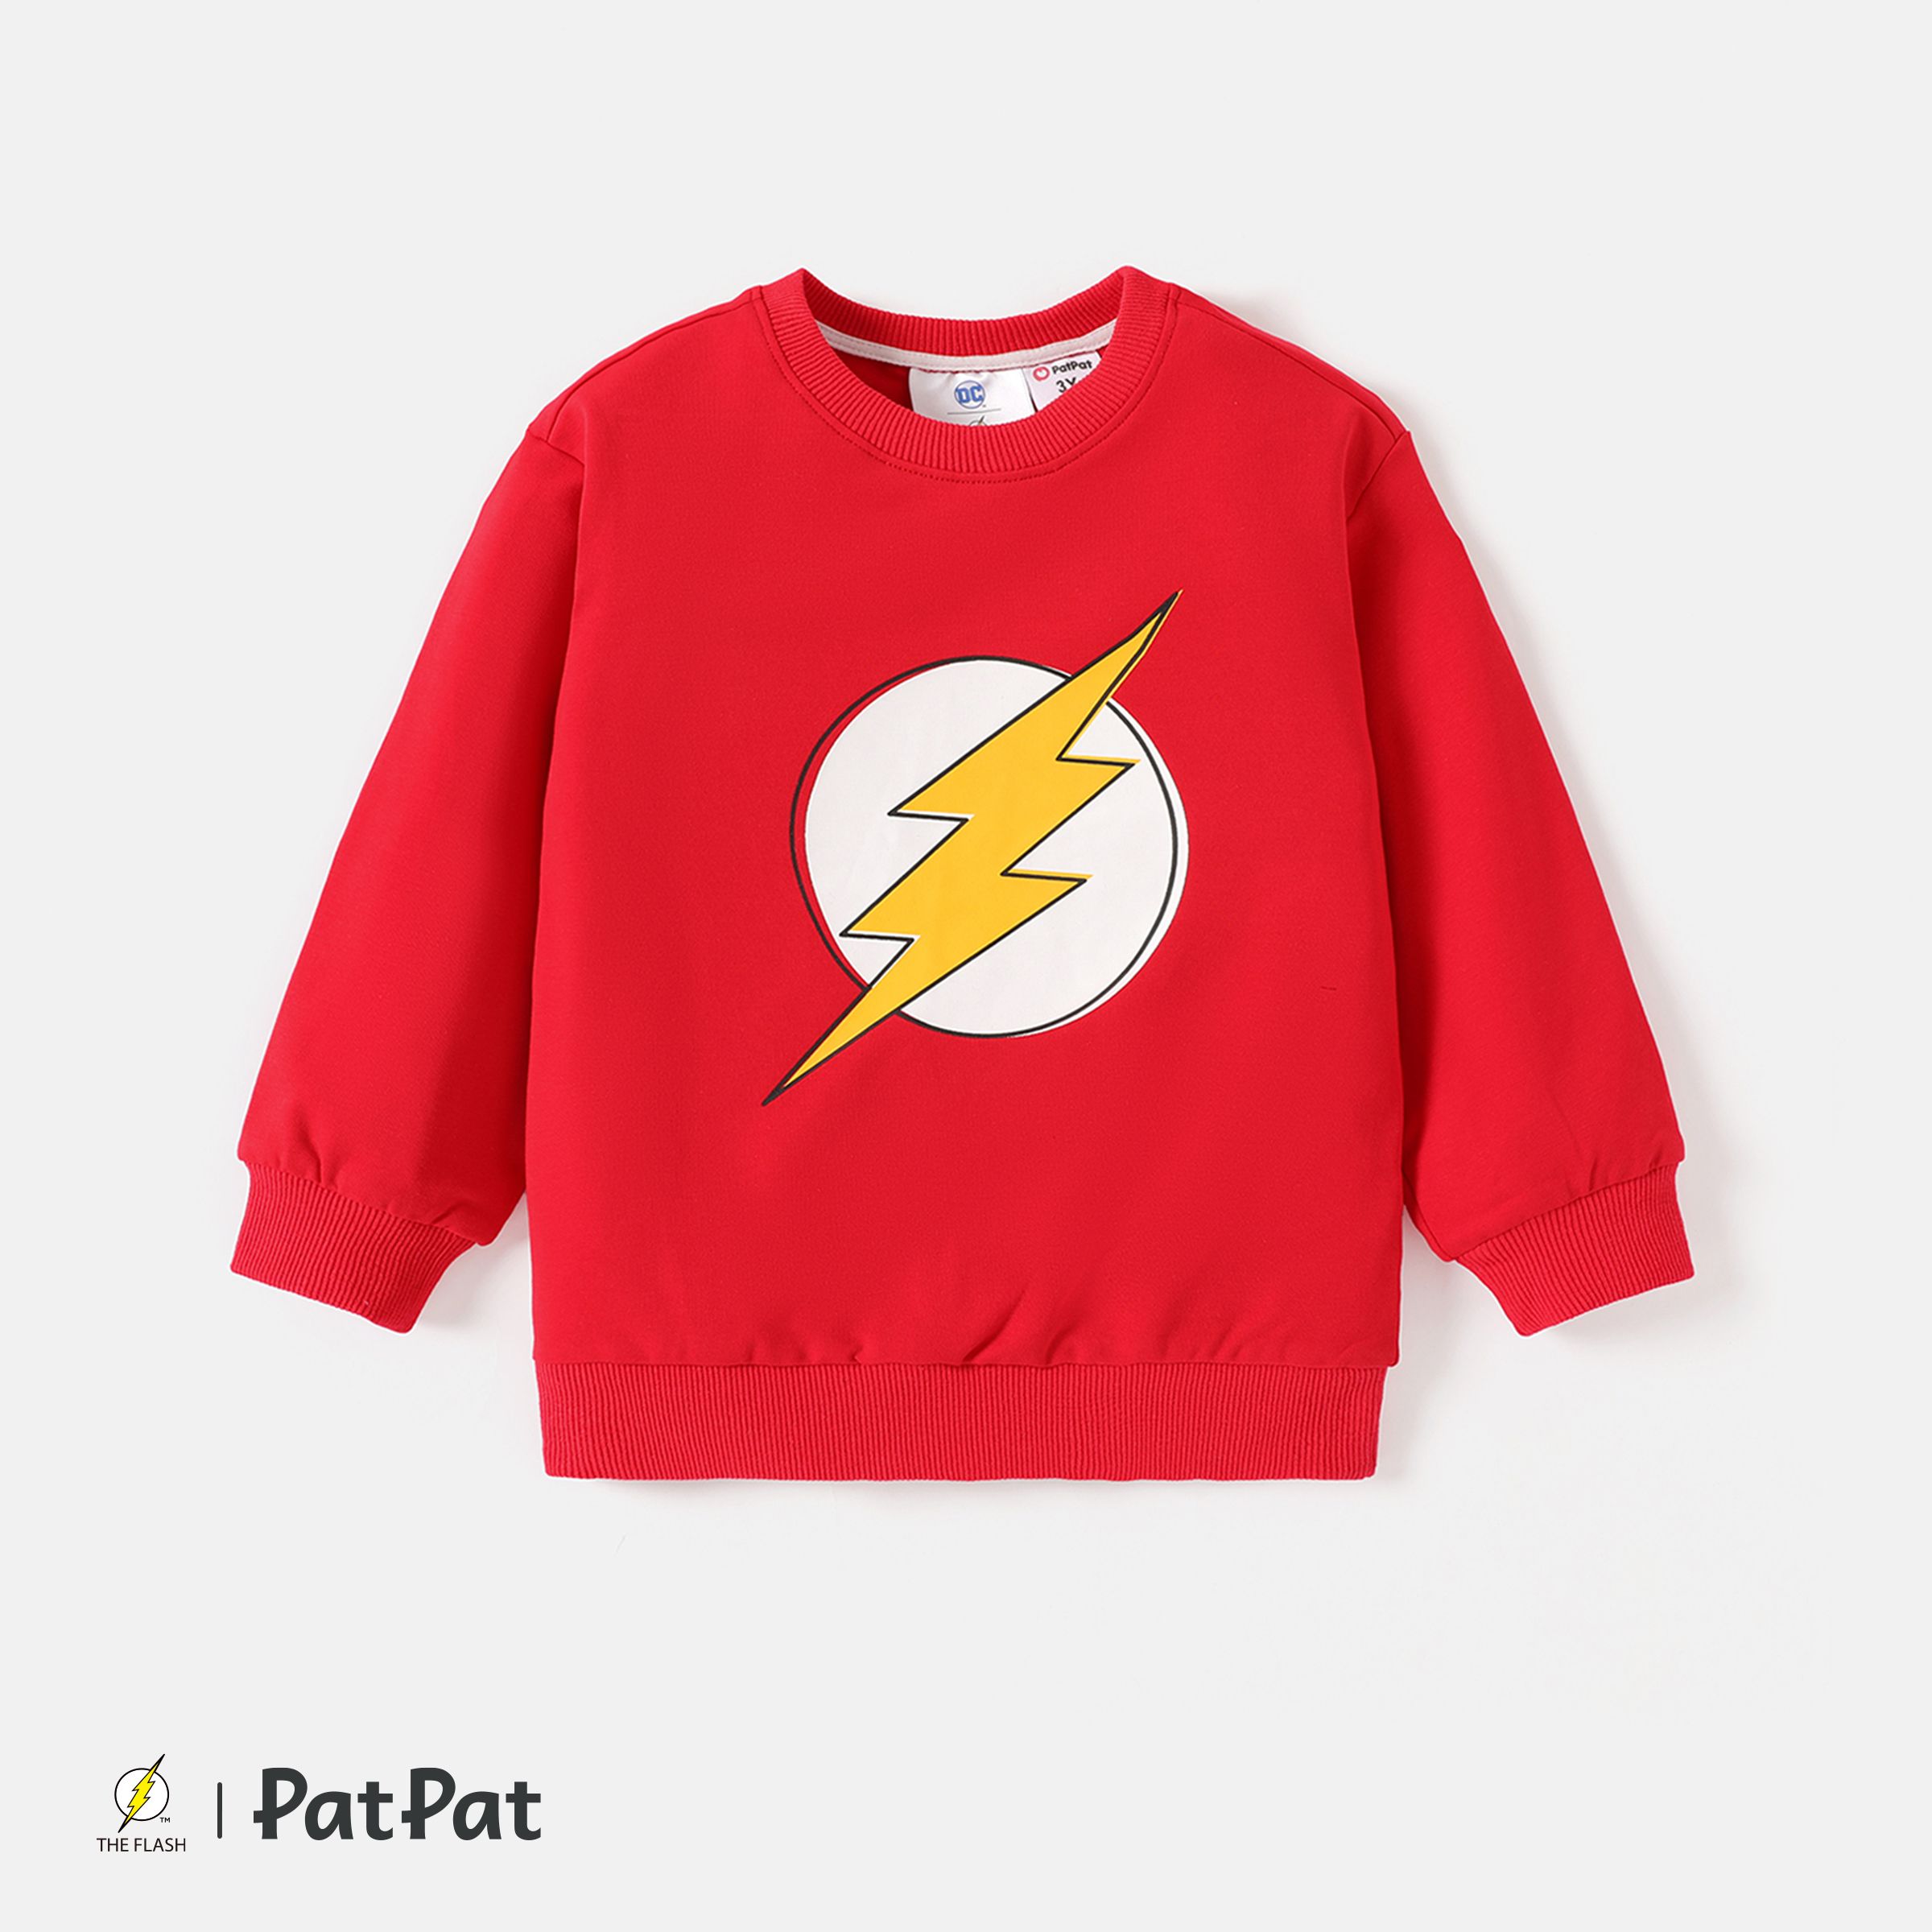 Justice League Toddler Boy/Girl Cotton Pullover Sweatshirt